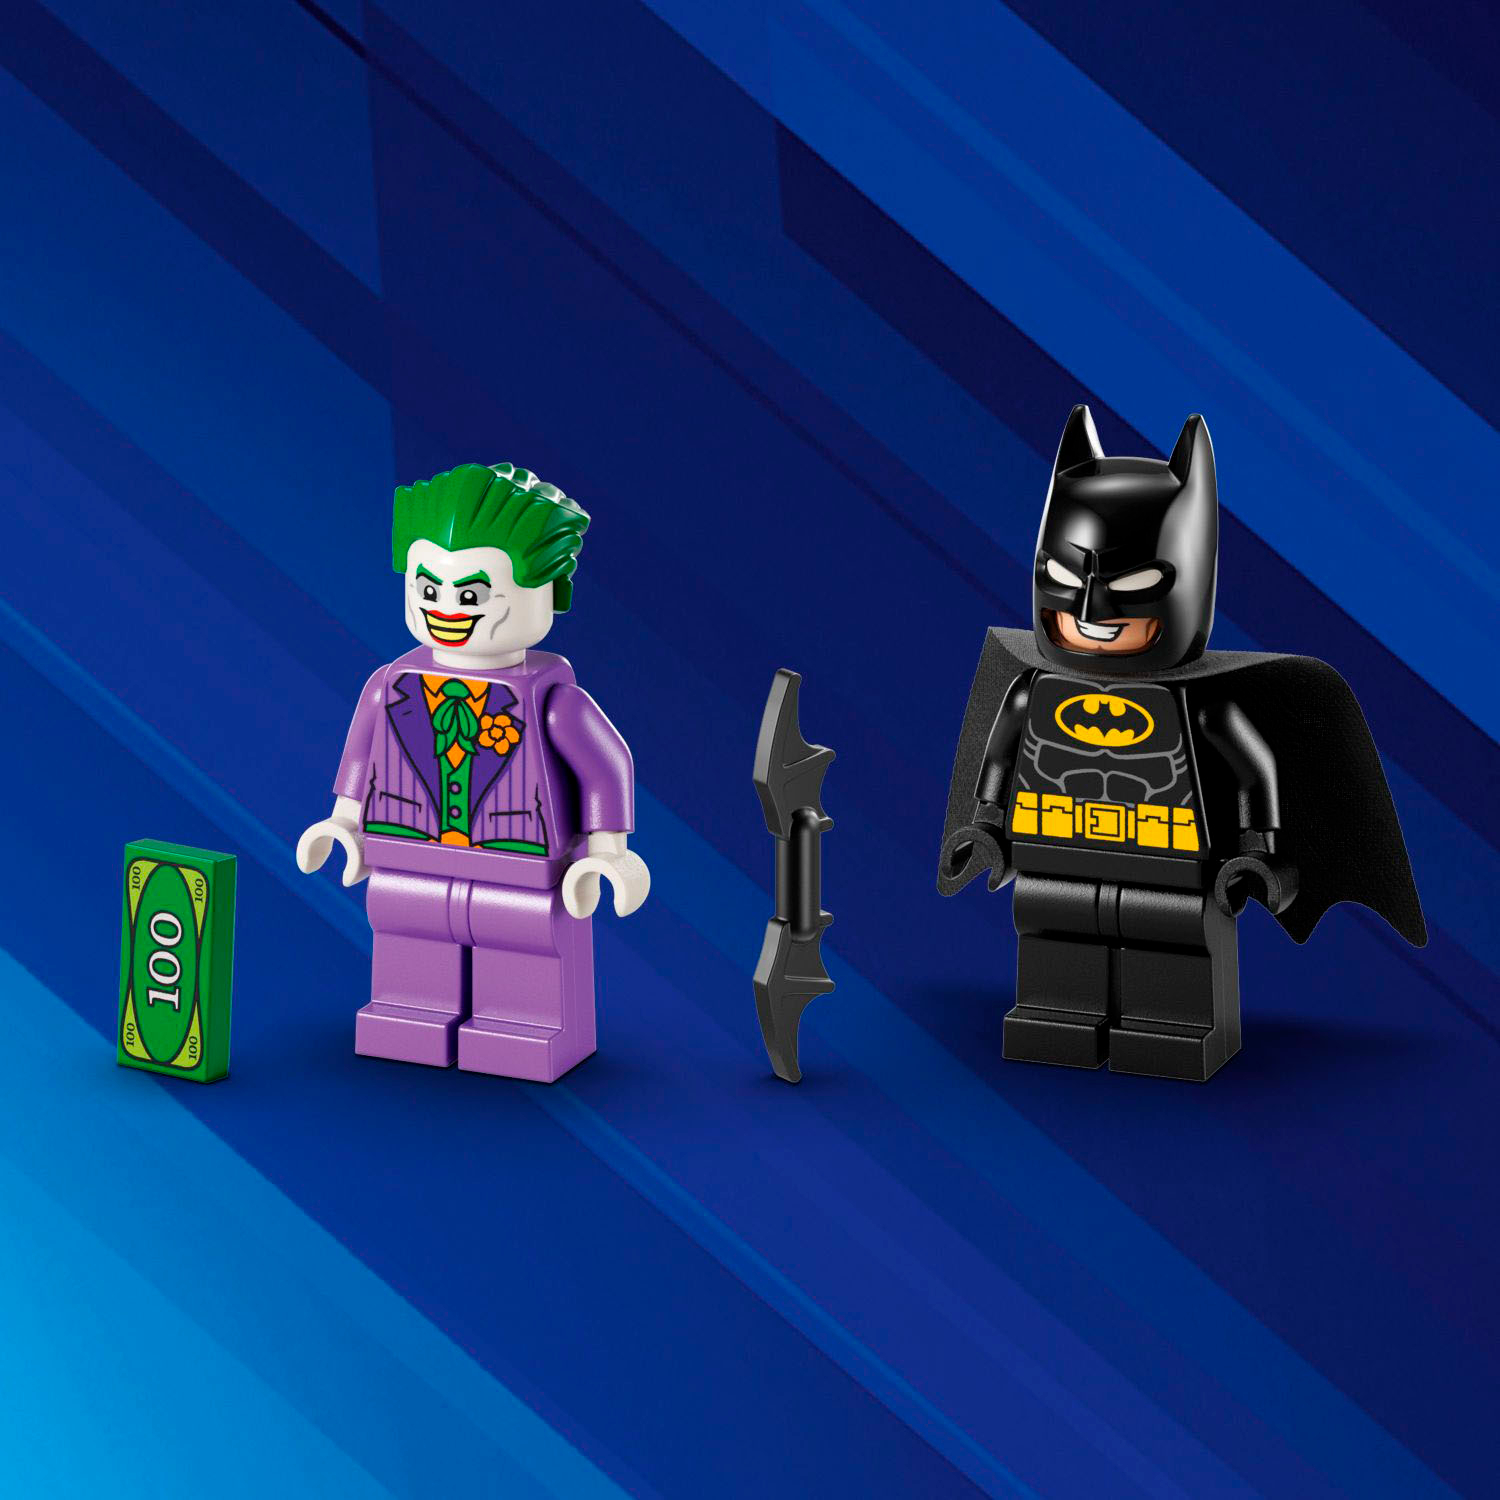 LEGO DC Super Heroes App-Controlled Batmobile 76112 6212585 - Best Buy